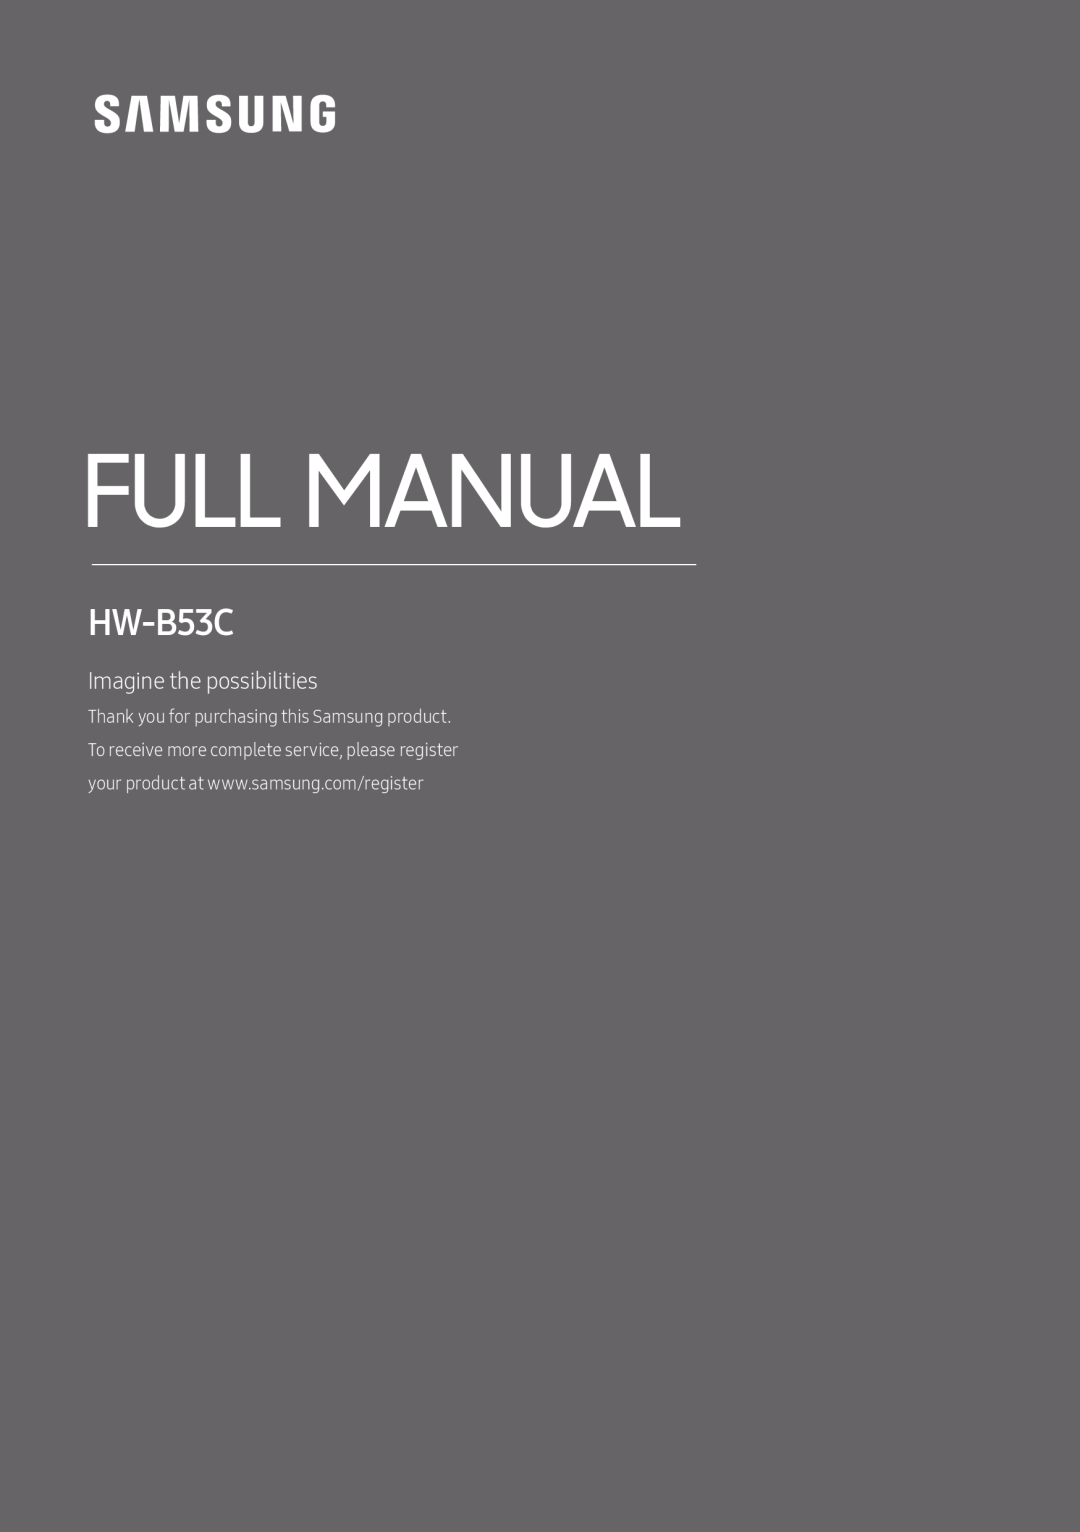 HW-B53C Standard HW-B53C